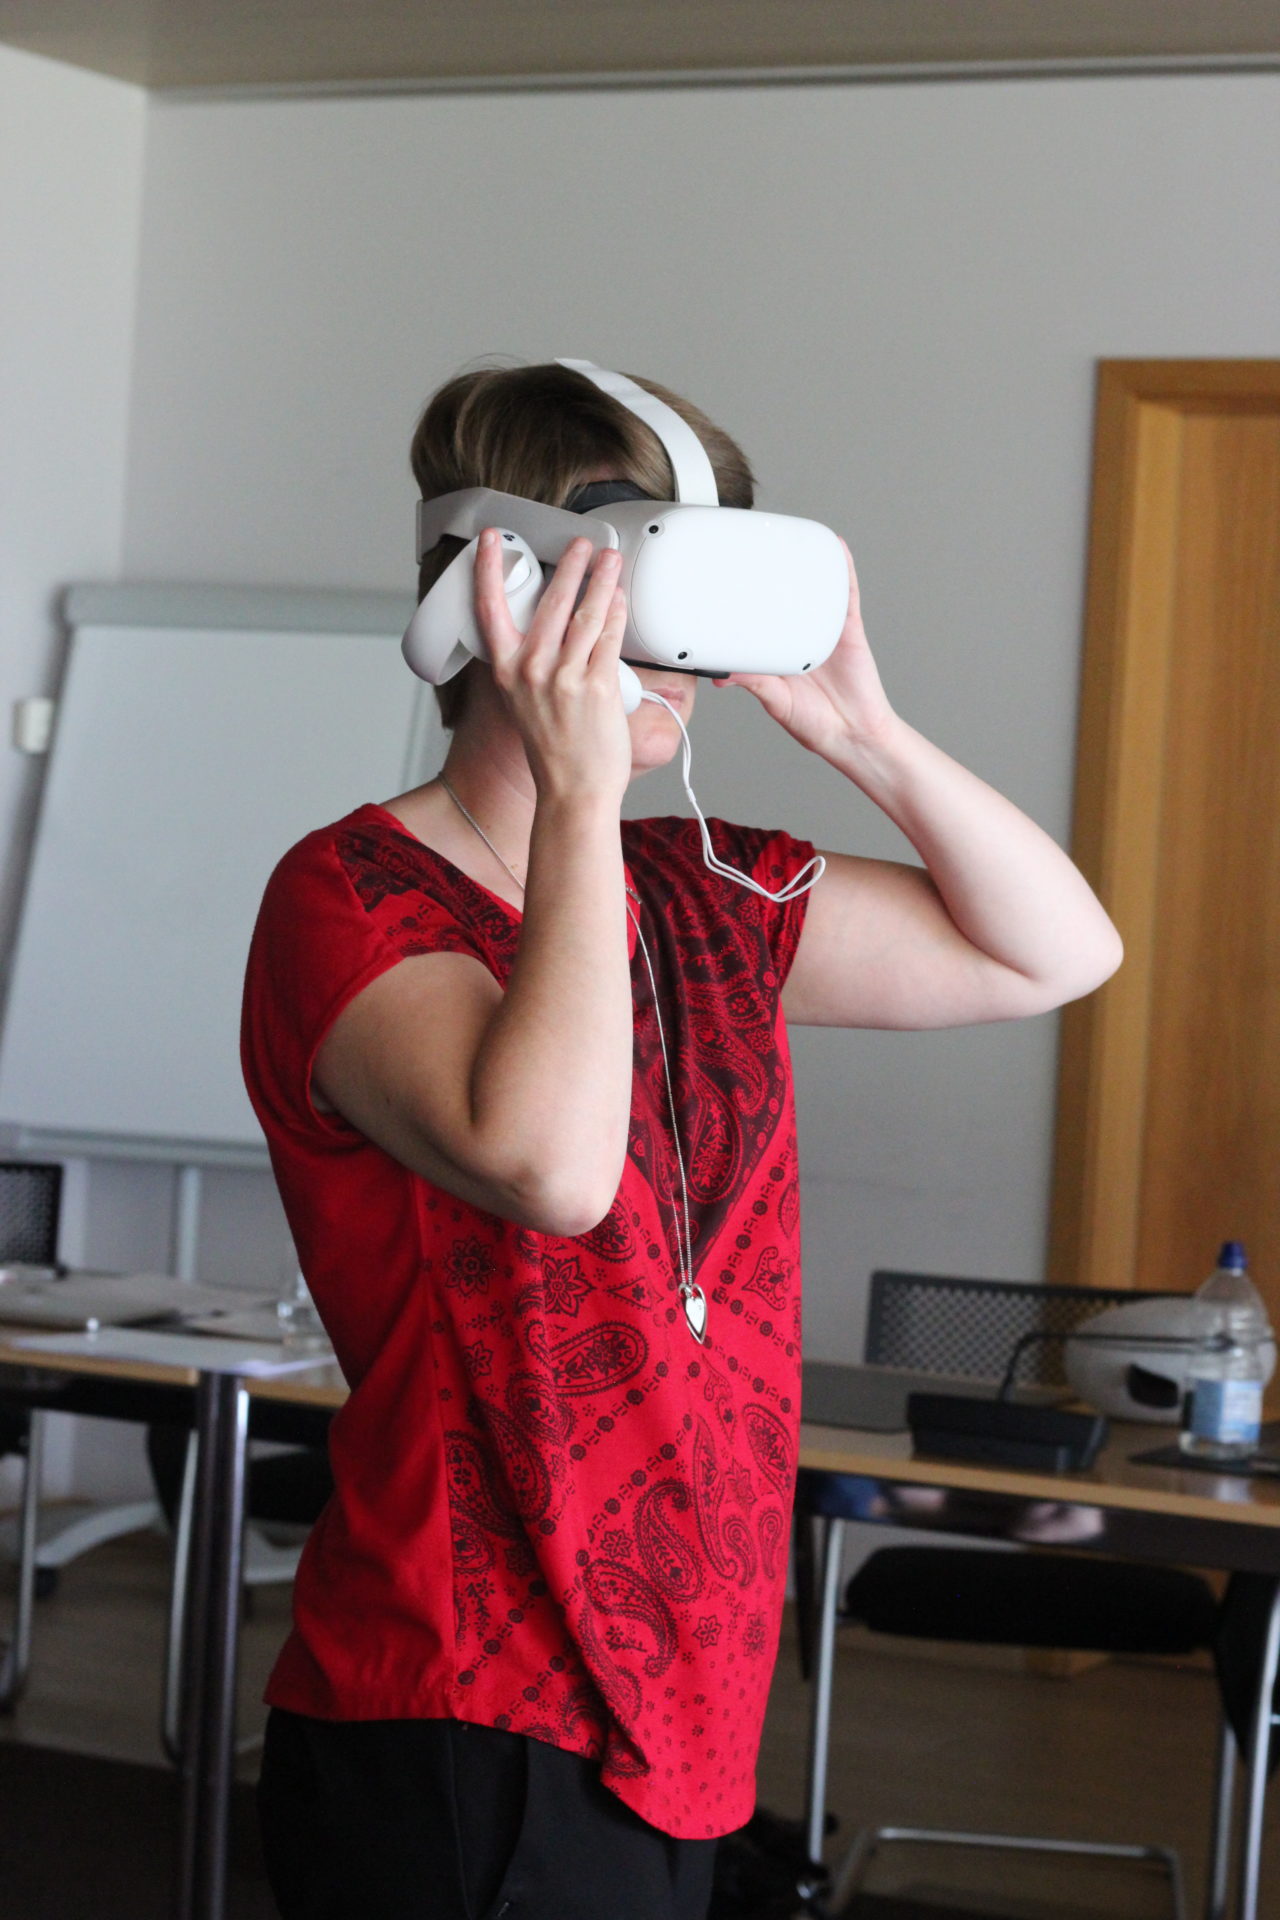 Christina Stimson is stood up wearing a virtual reality headset as she demonstrates robot telepresence.